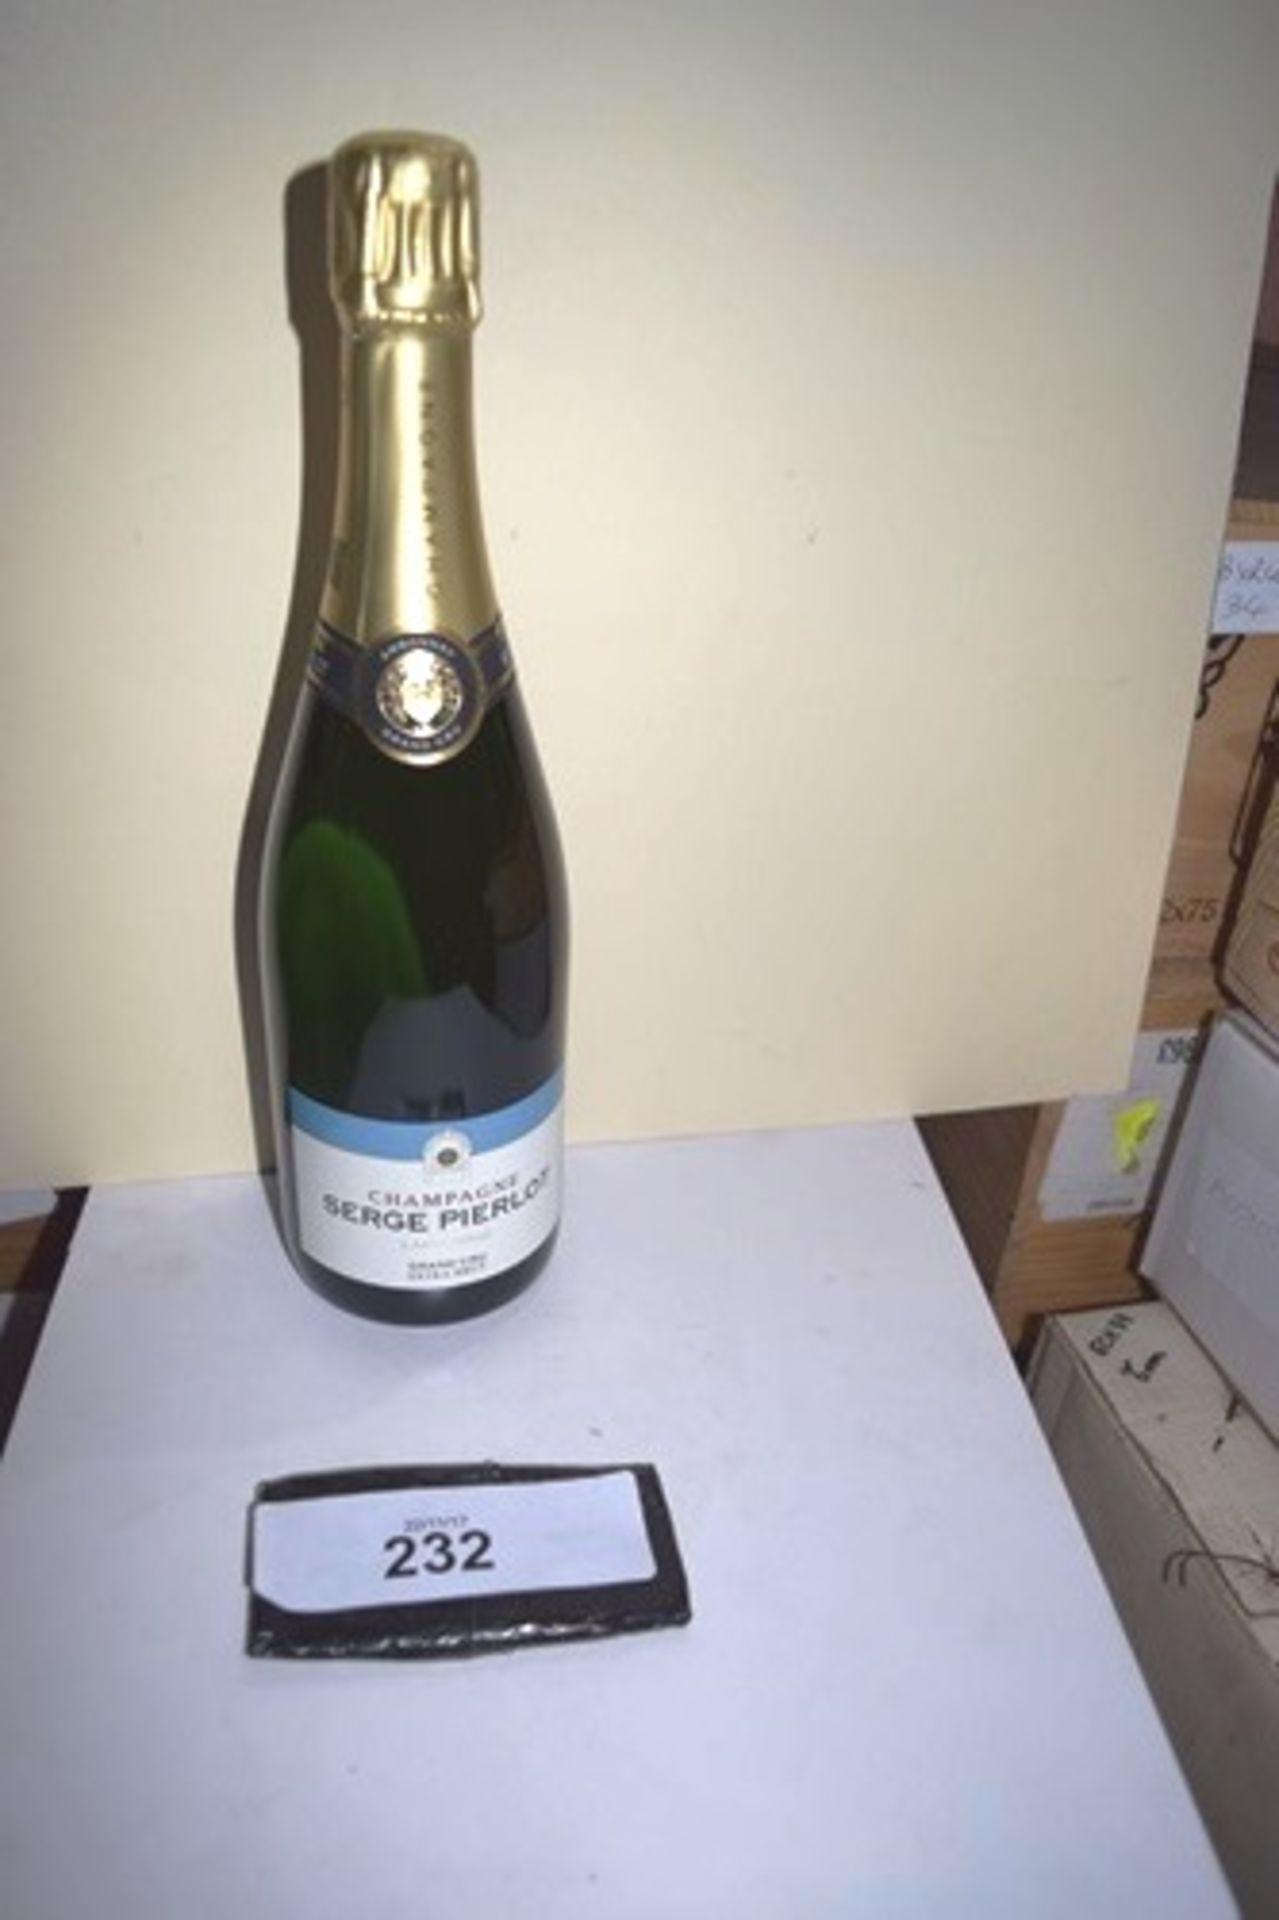 6 x 750ml bottles of Serge Pierlot Grand Cru Extra Brut Champagne (6)